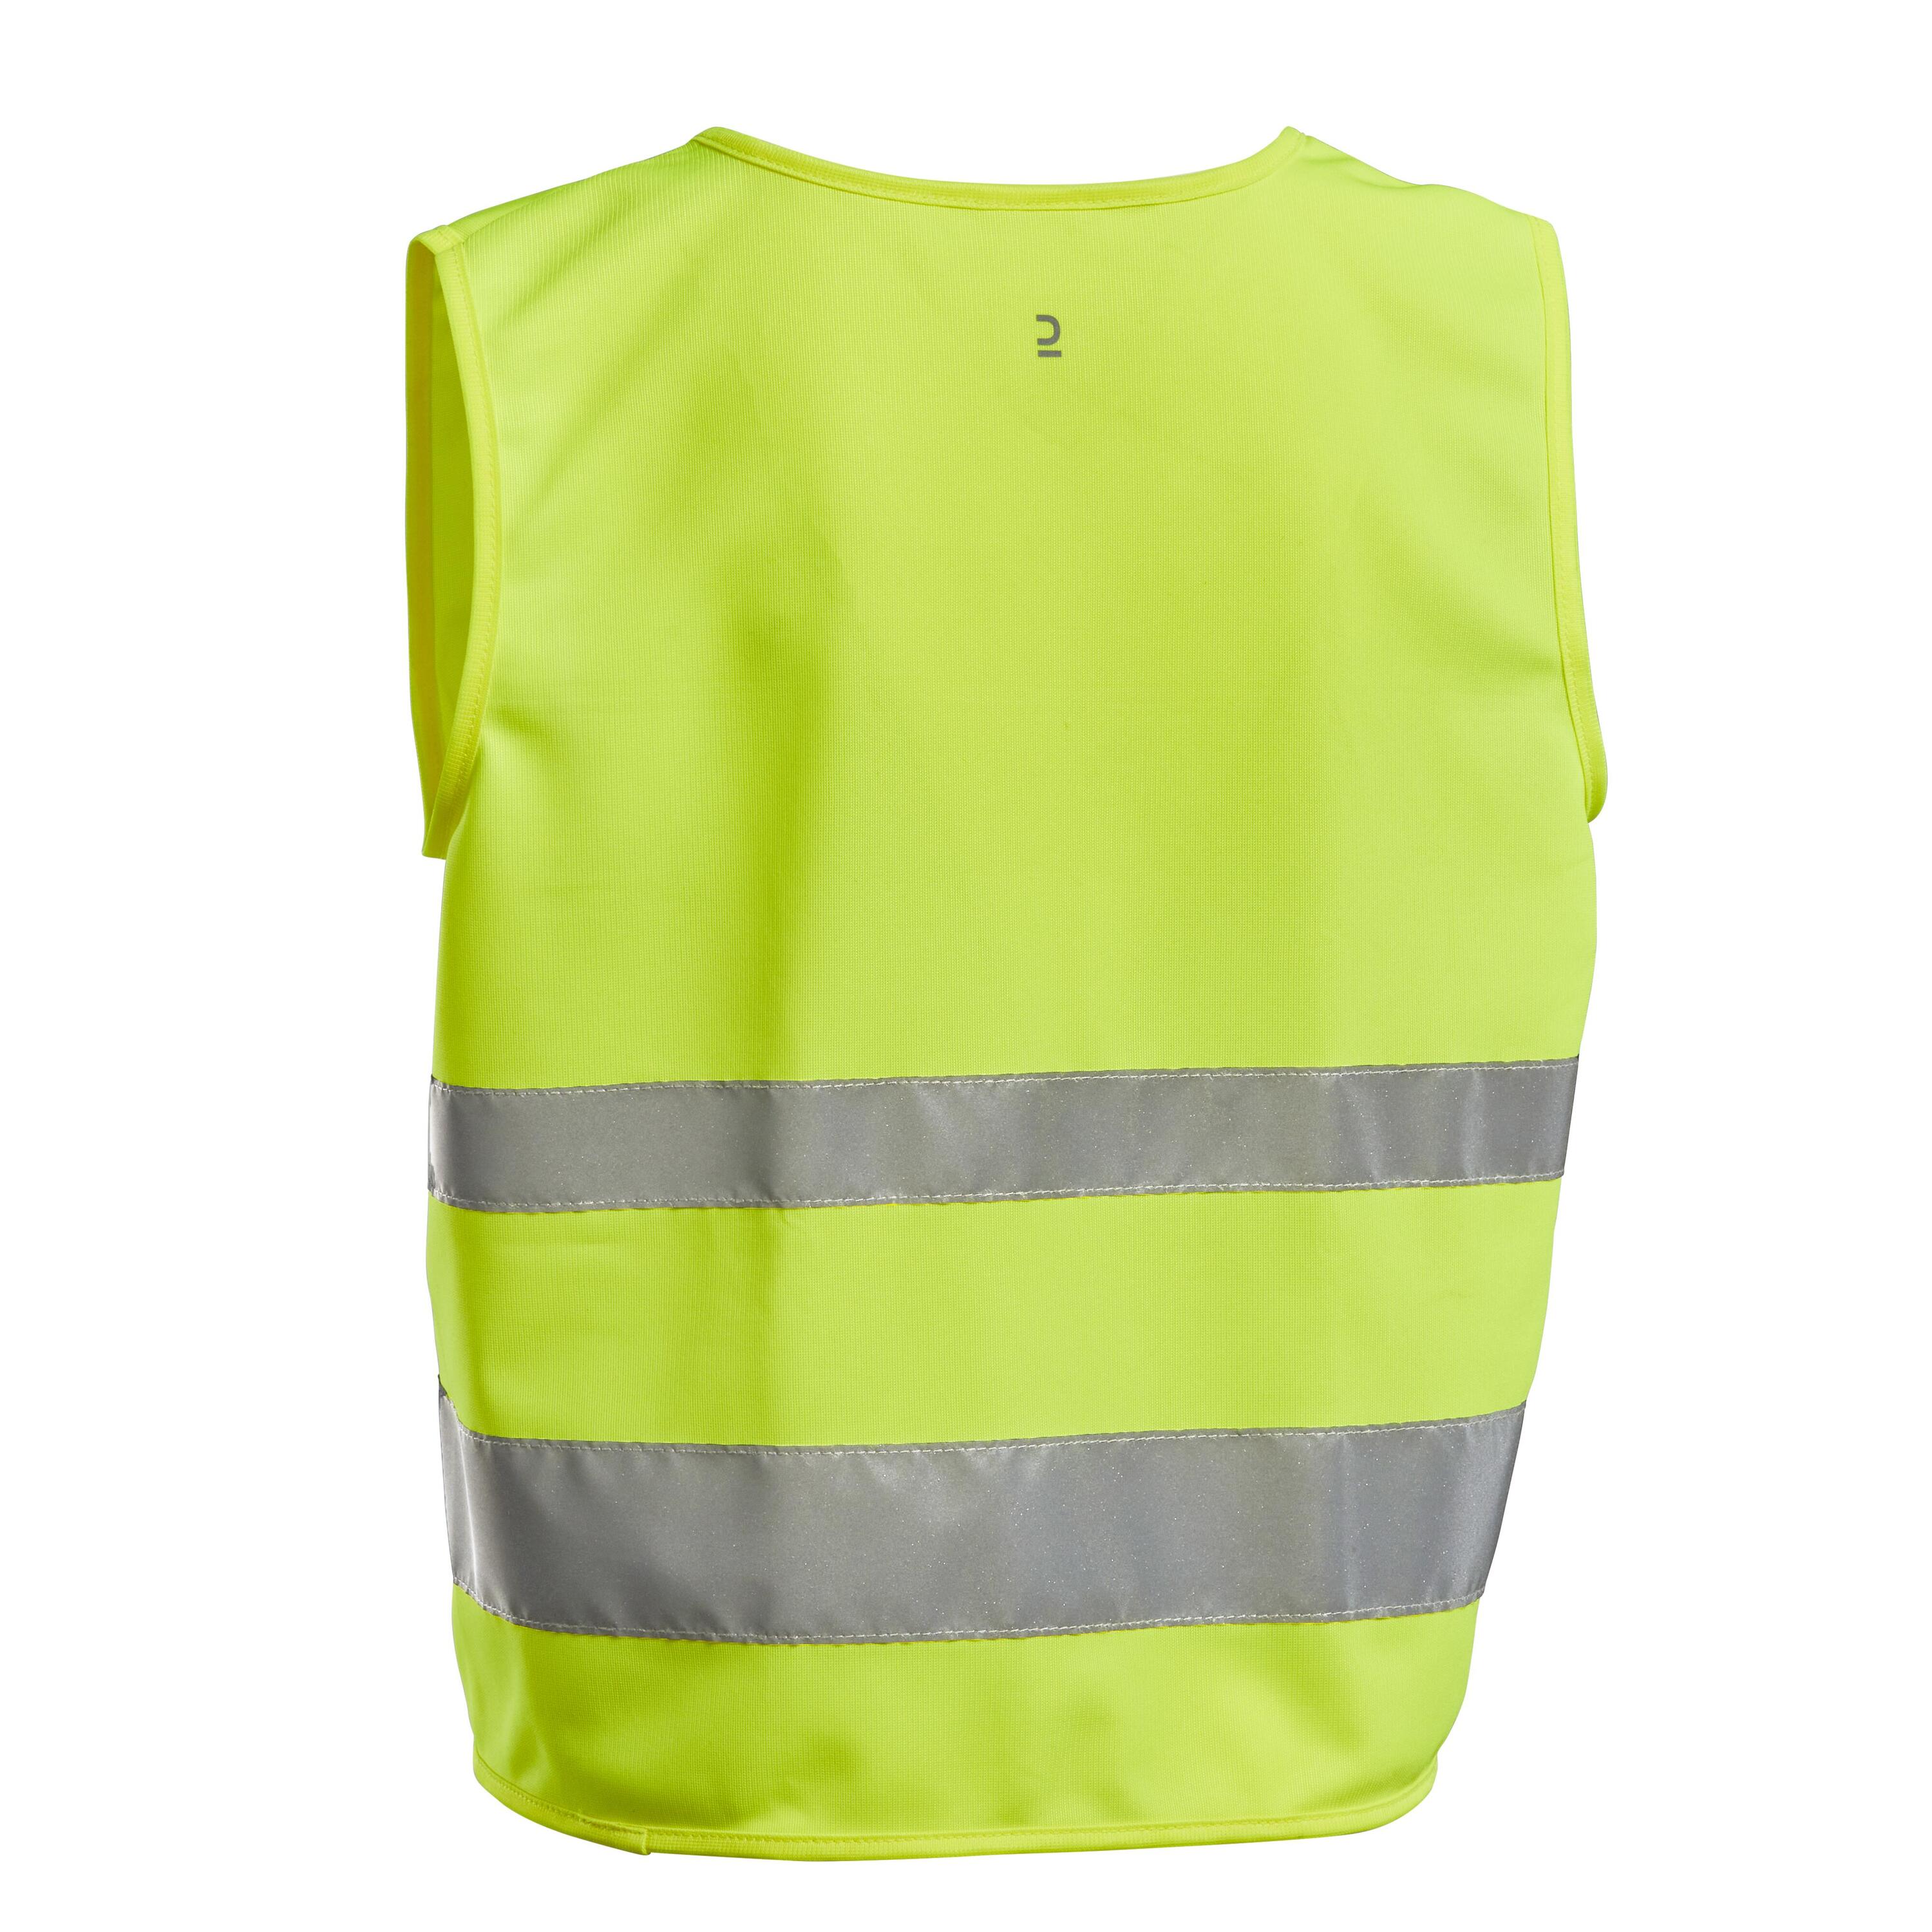 Kids' Safety Vest - Yellow 2/4